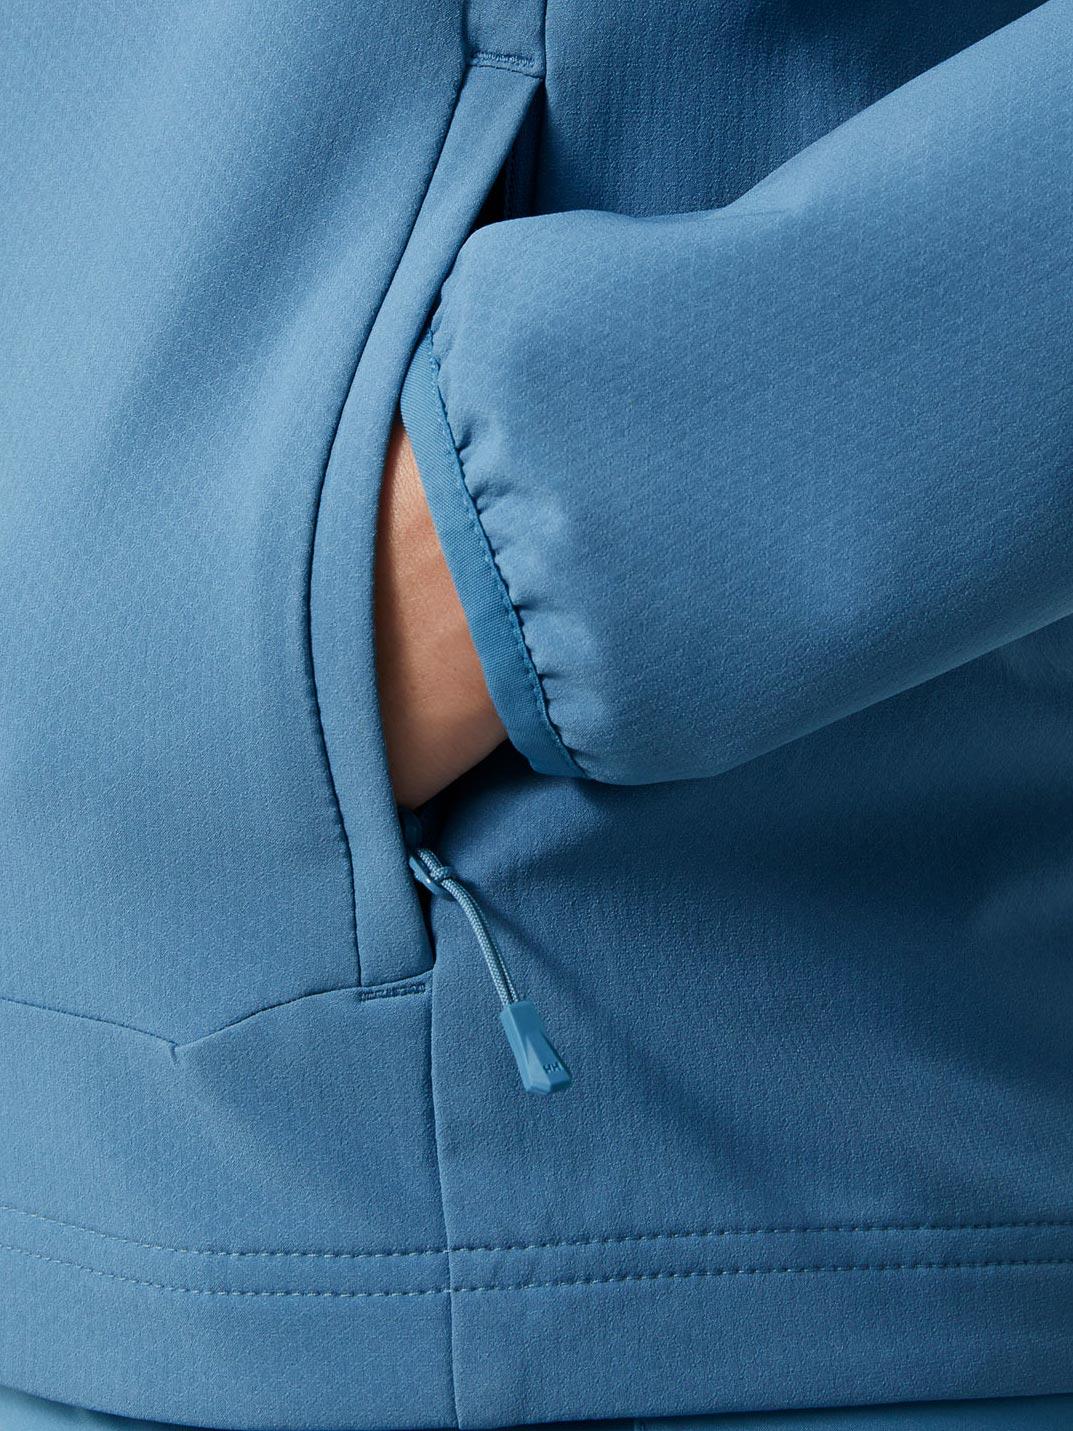 Selected image for HELLY HANSEN Ženska jakna W AURORA SHIELD FLEECE Jacket plava